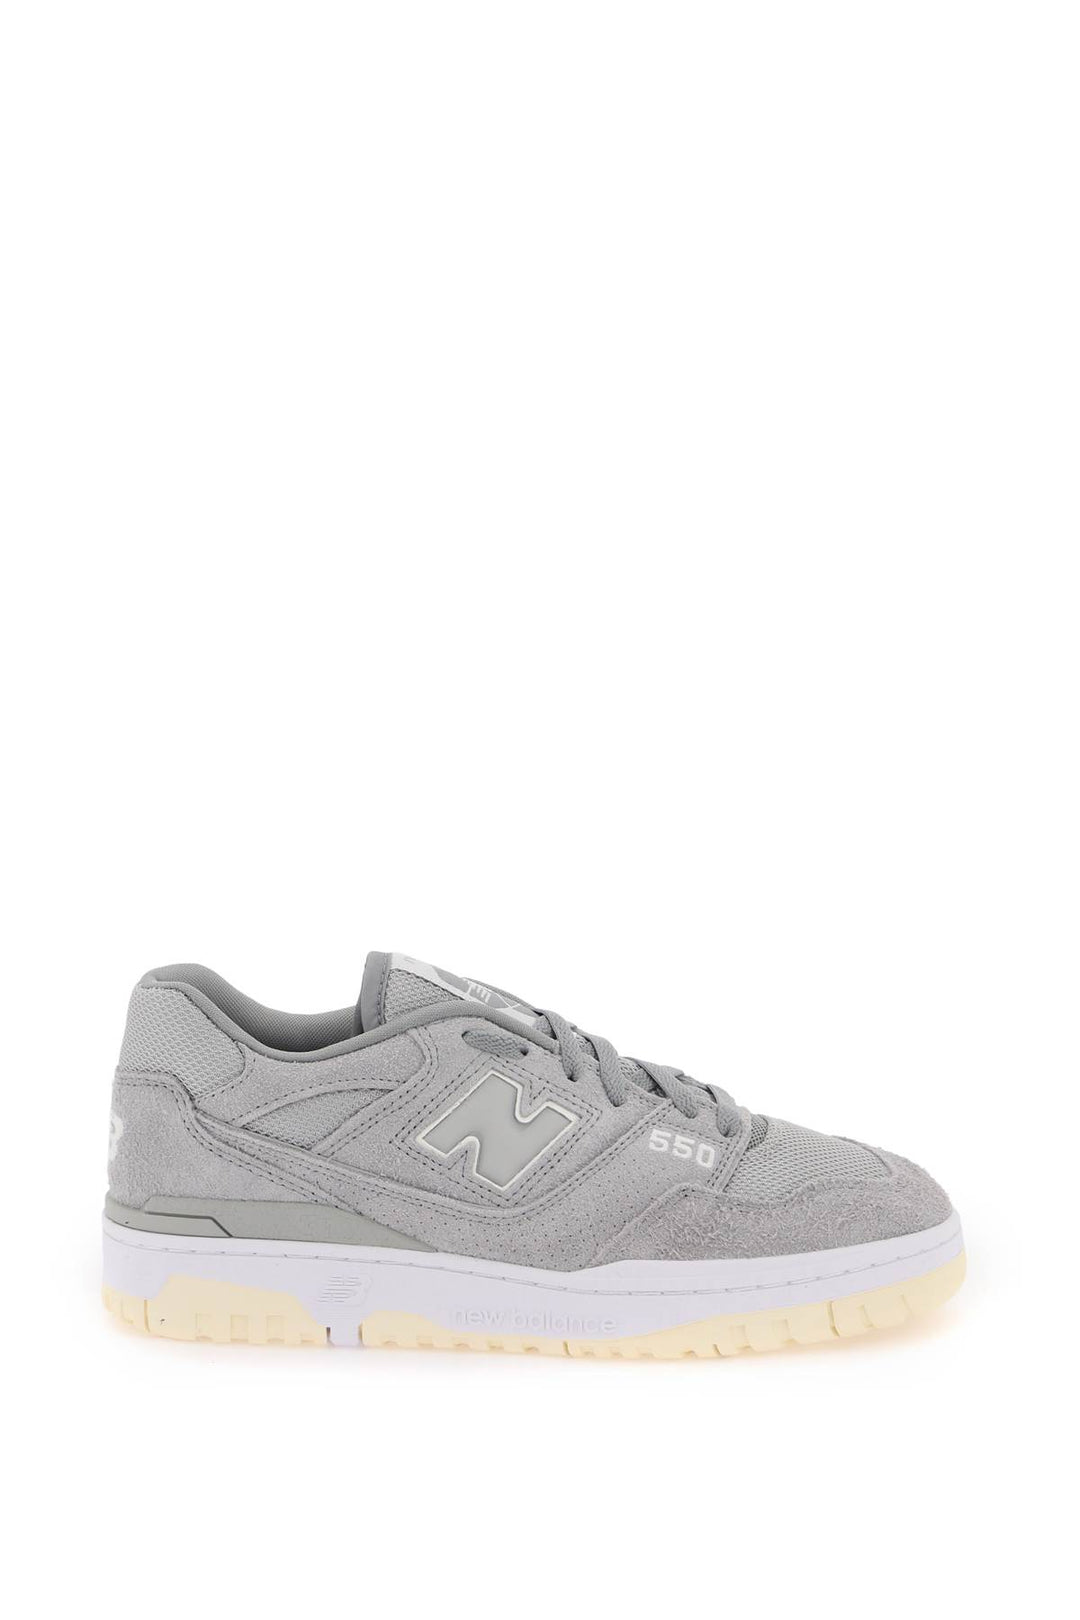 New Balance 550 Sneakers   Grey